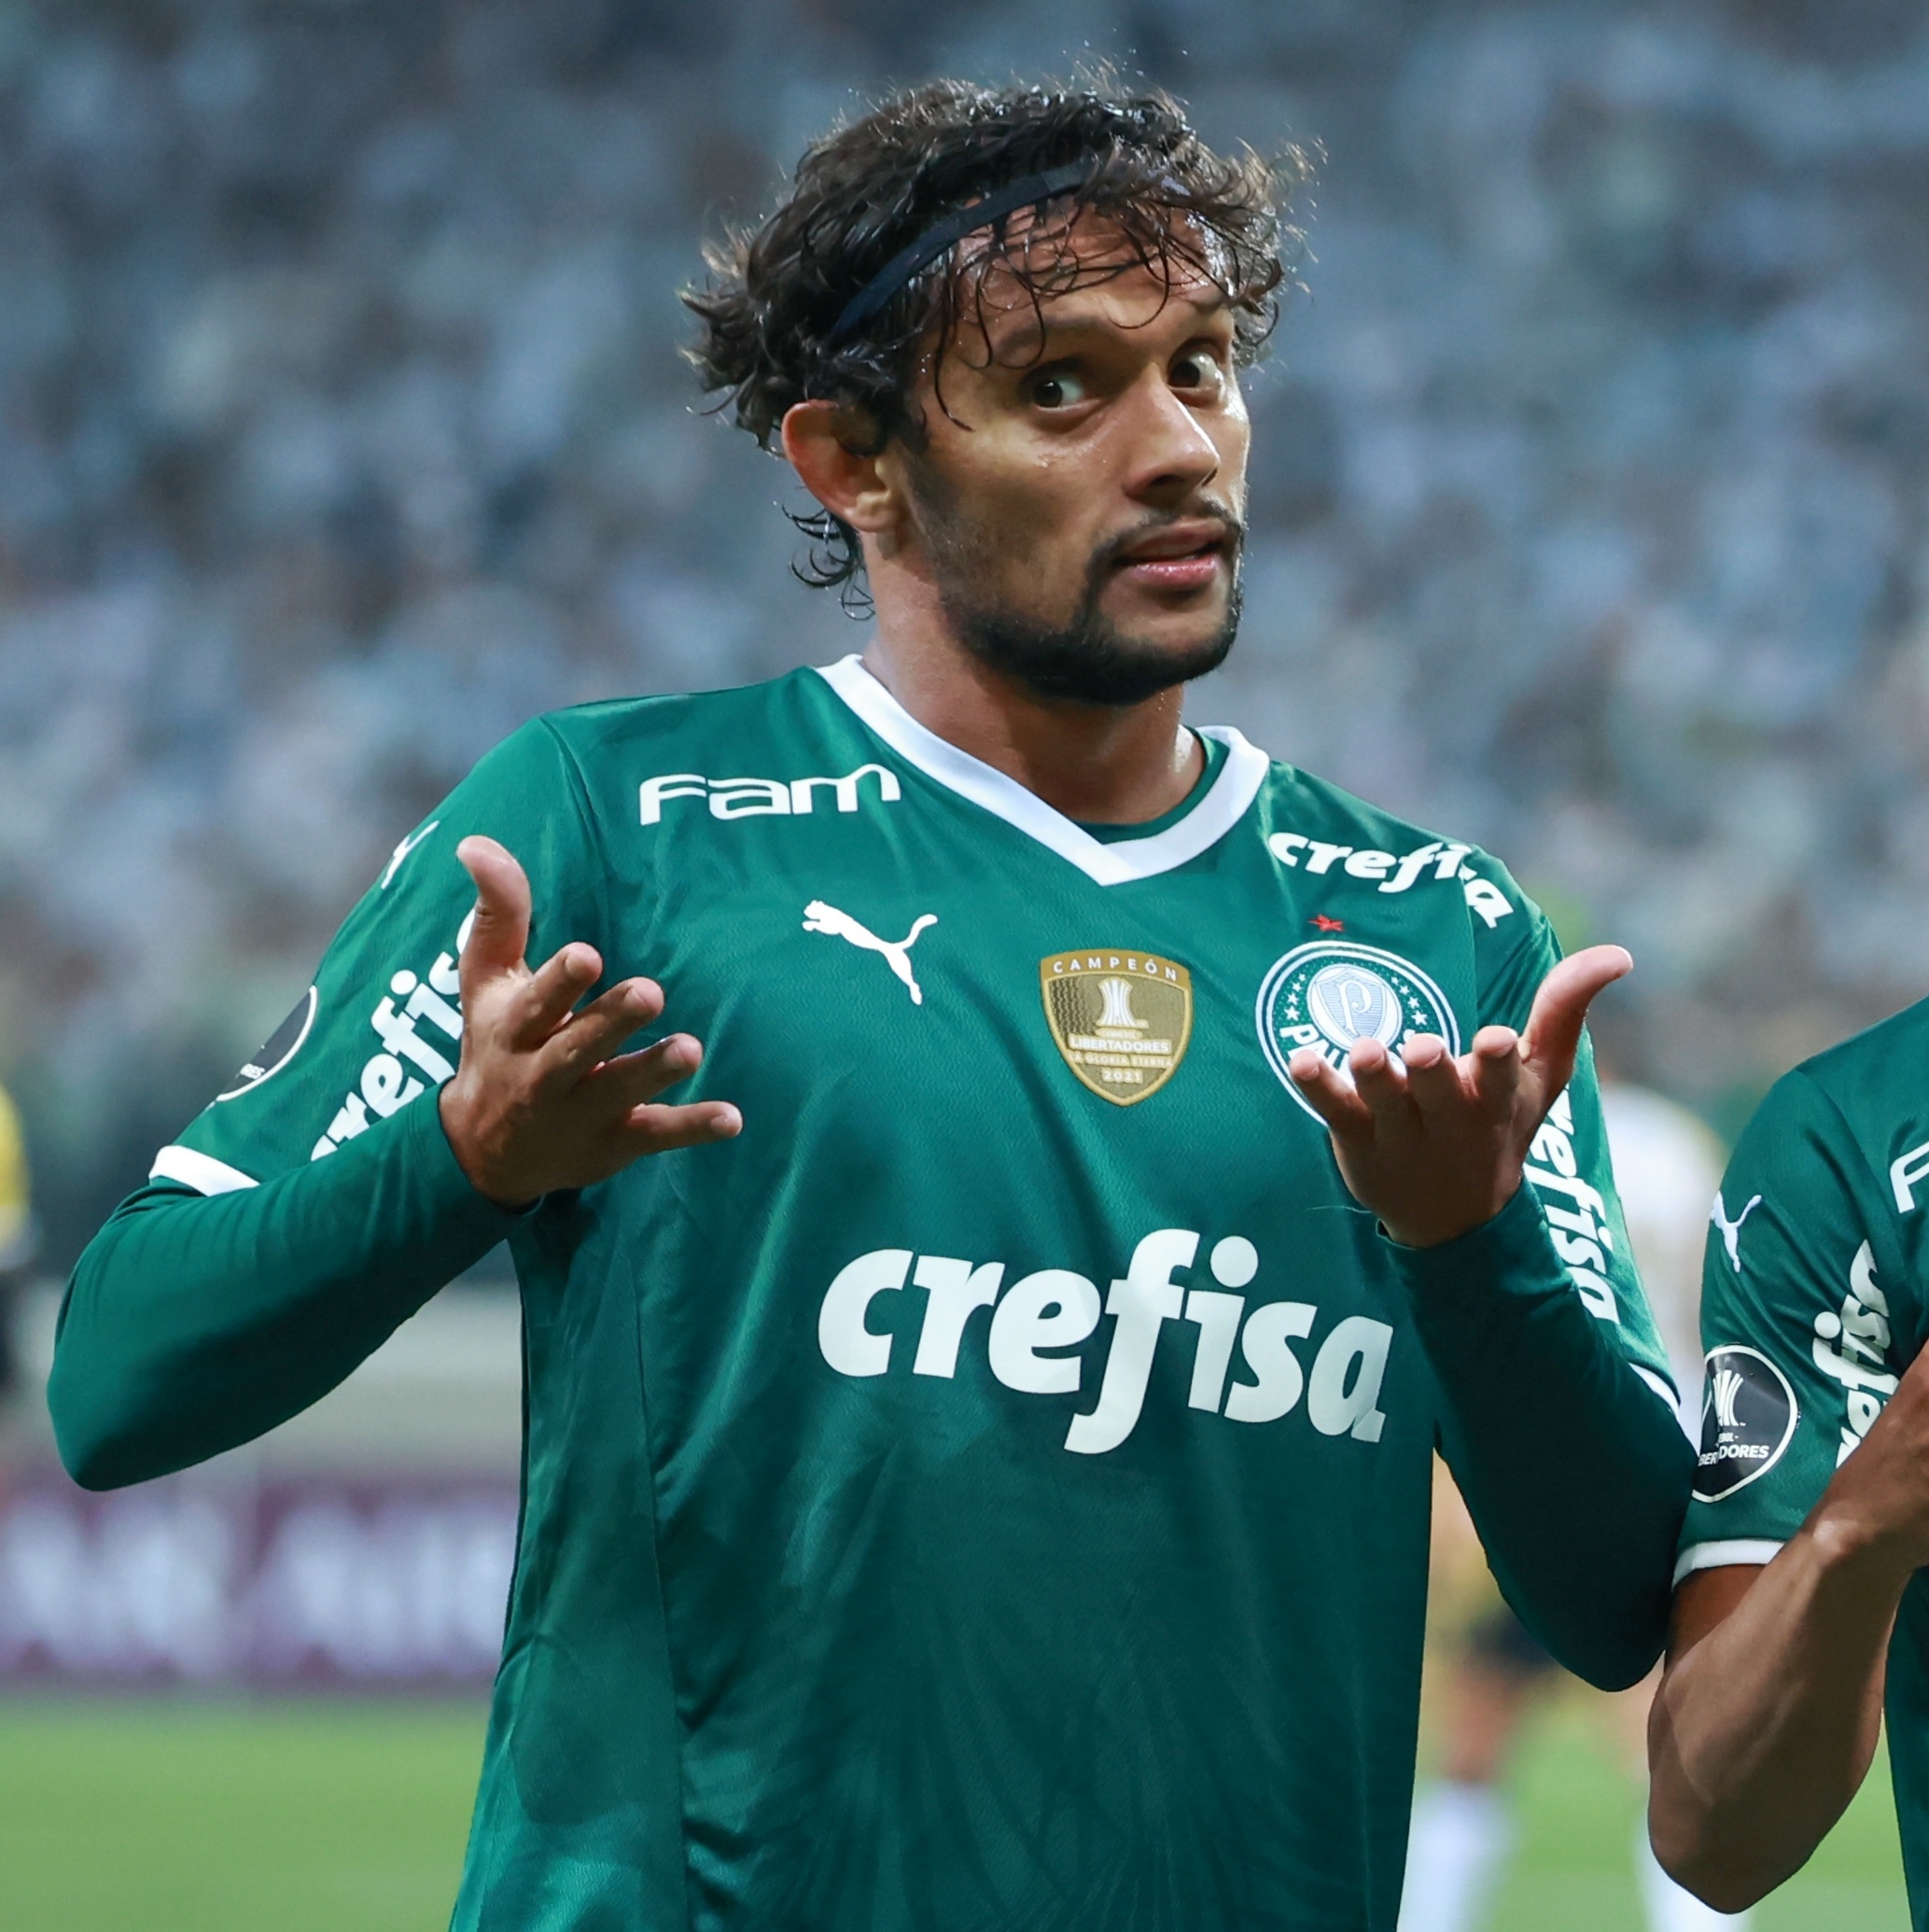 Palmeiras parabeniza Gustavo Scarpa pelo 28º aniversário